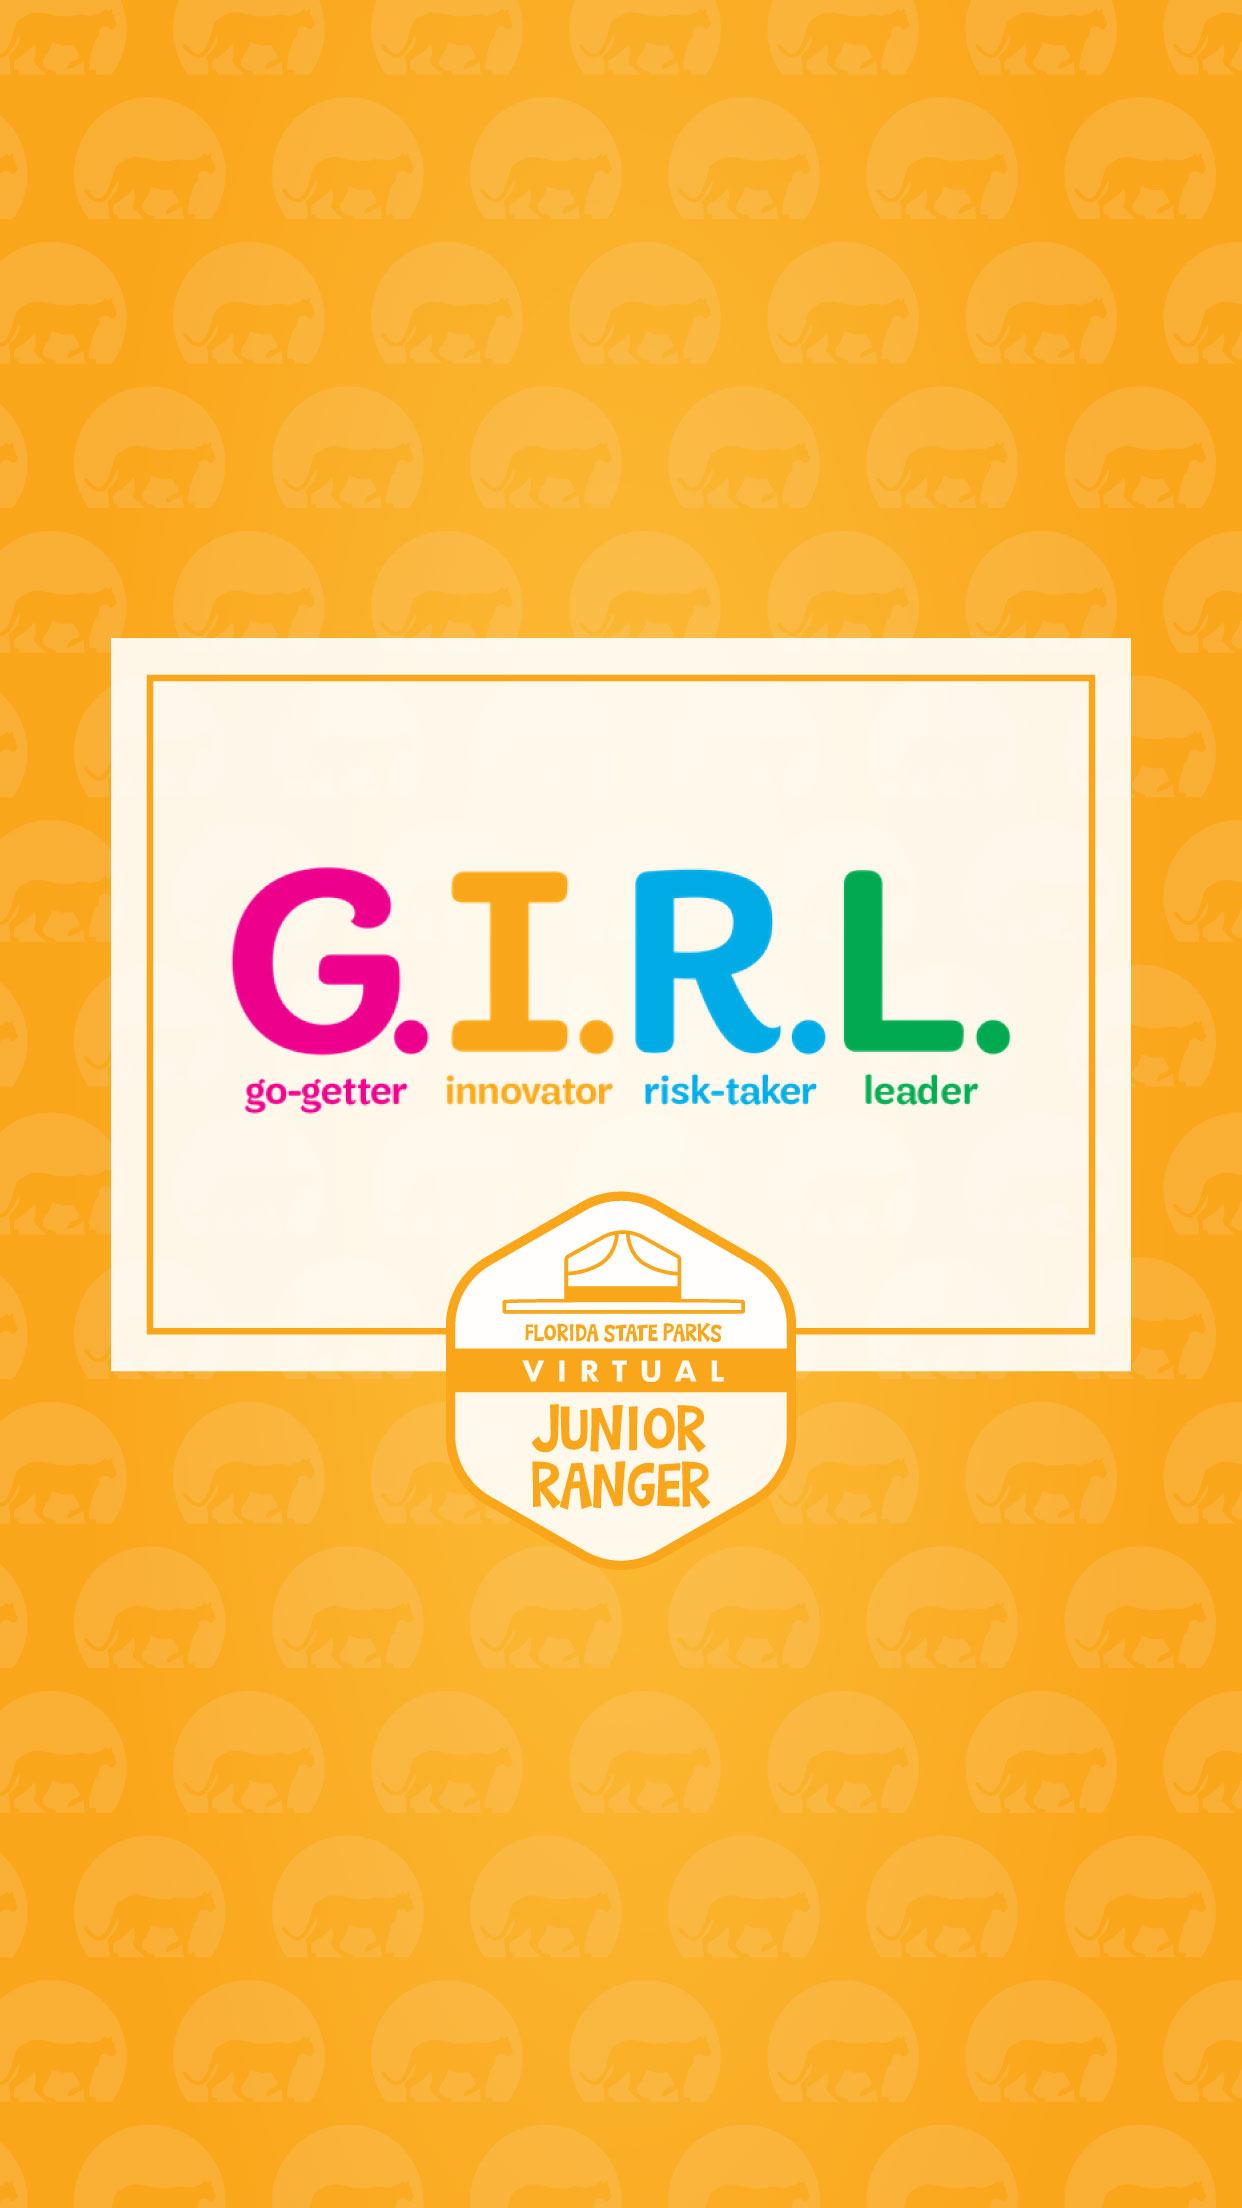 Virtual Junior Ranger Badge and GIRL on Orange Background formatted for Mobile